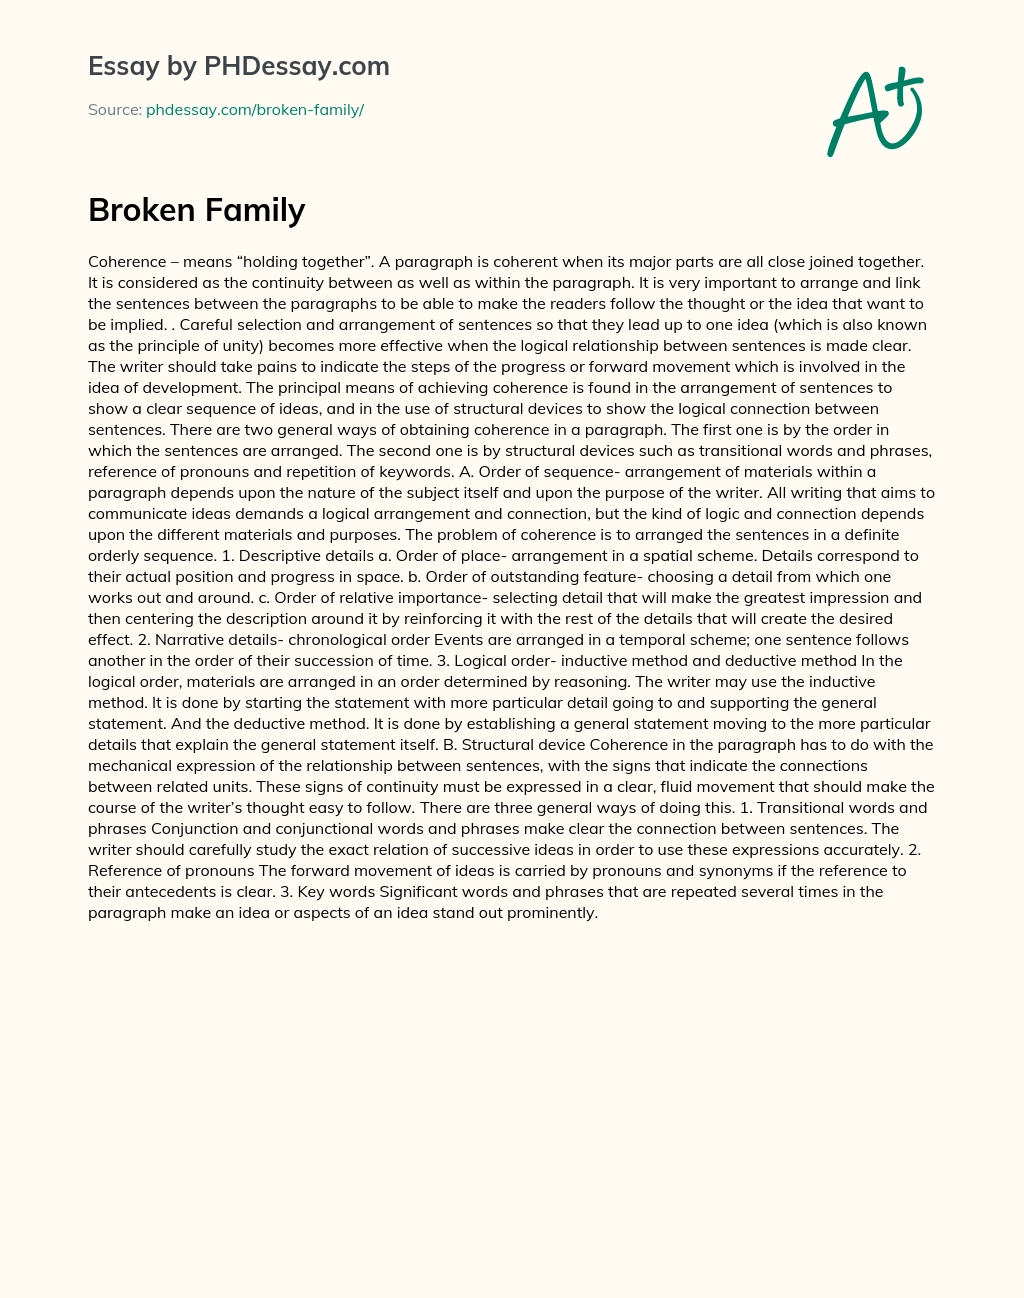 argumentative essay broken family